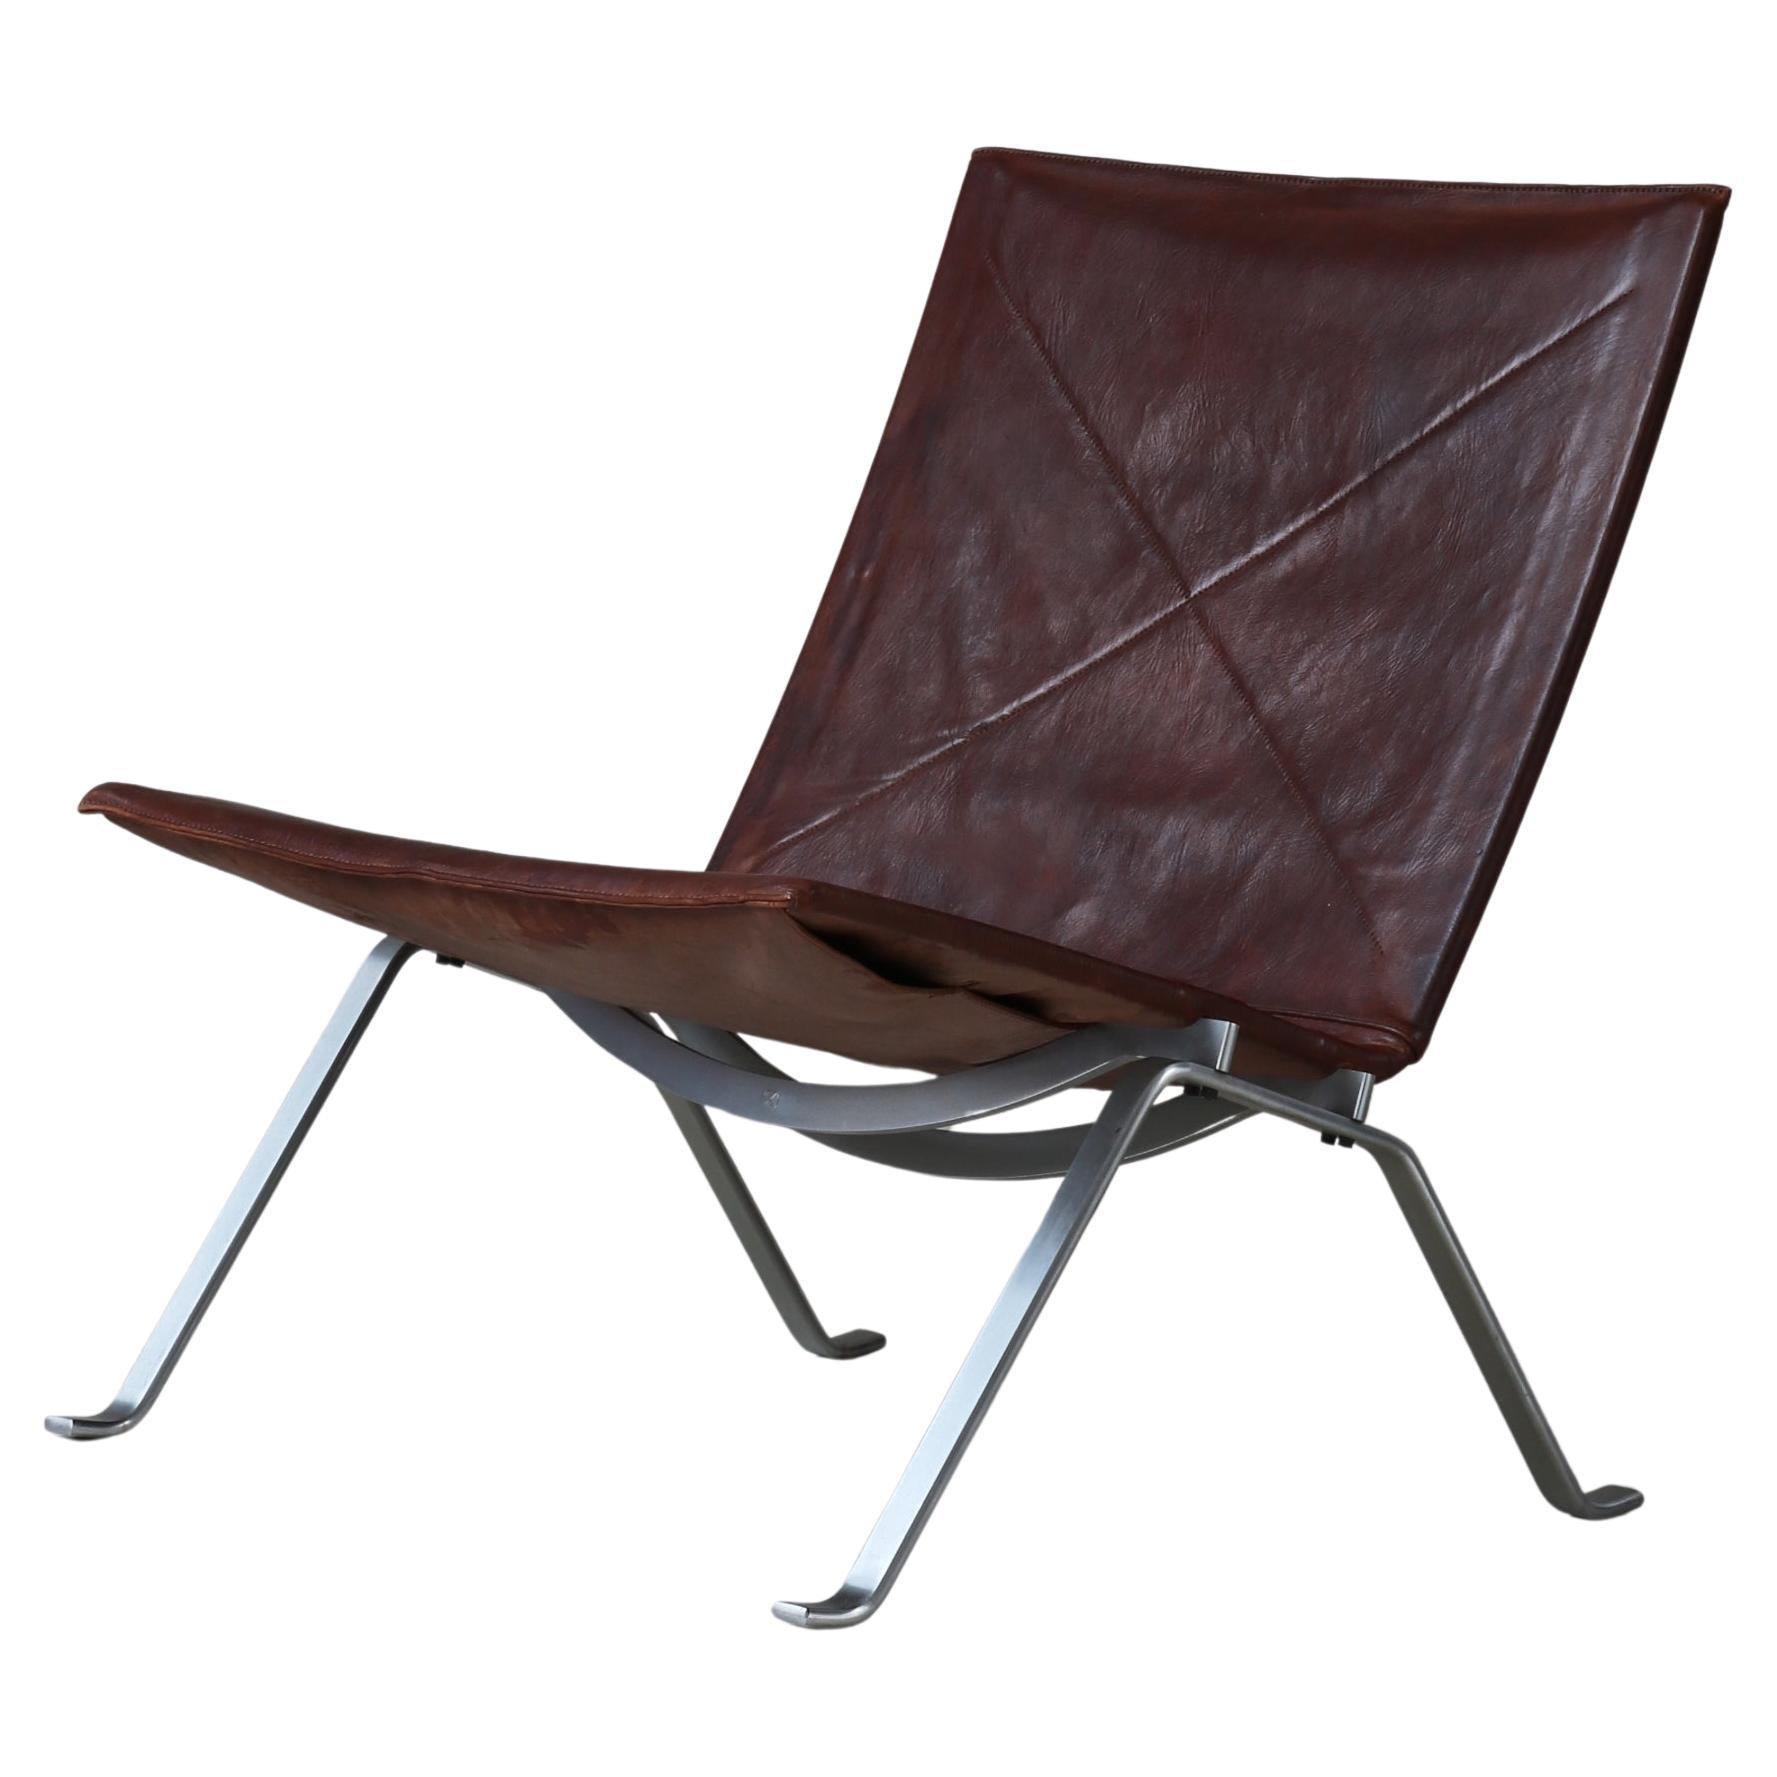 Poul Kjærholm Chair "PK-22" in Original Leather by E. Kold Christensen, 1960s For Sale